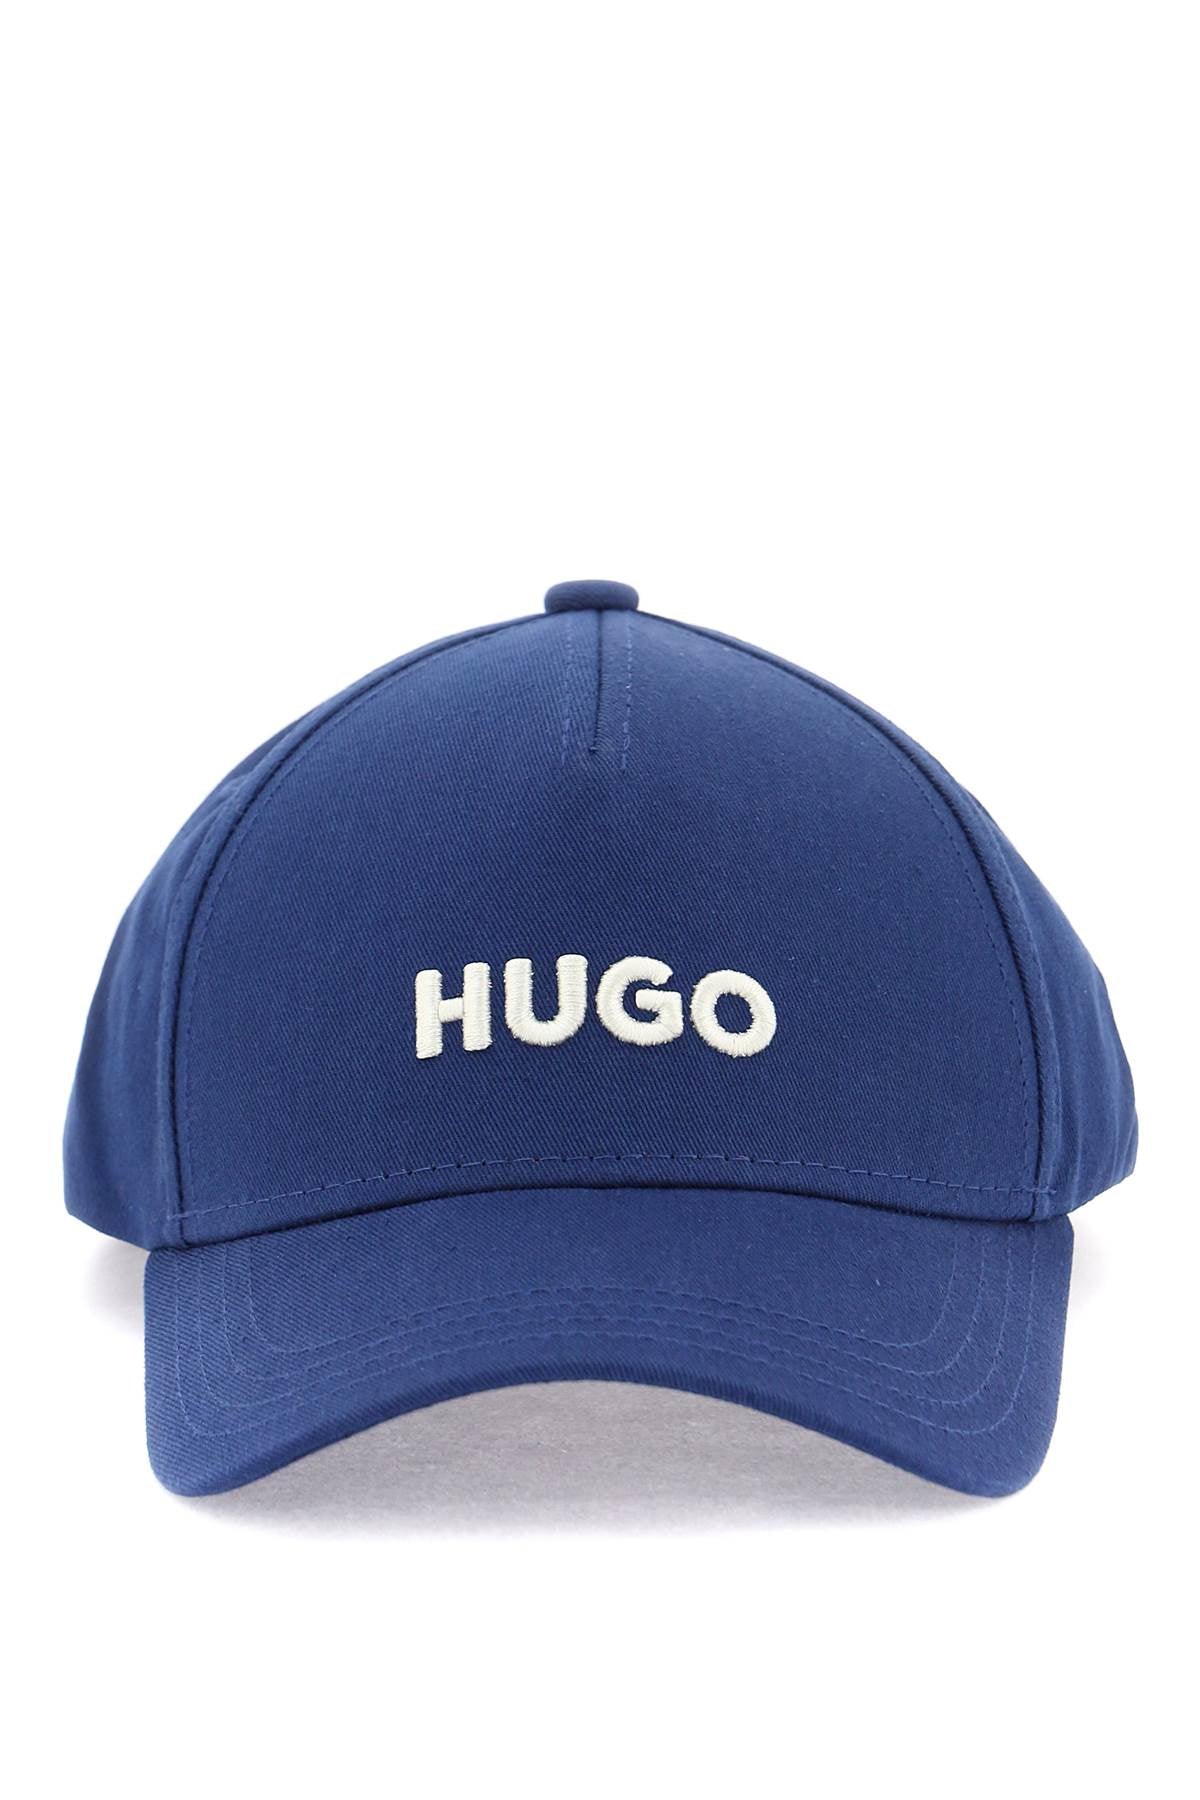 Hugo baseball cap with embroidered logo-0